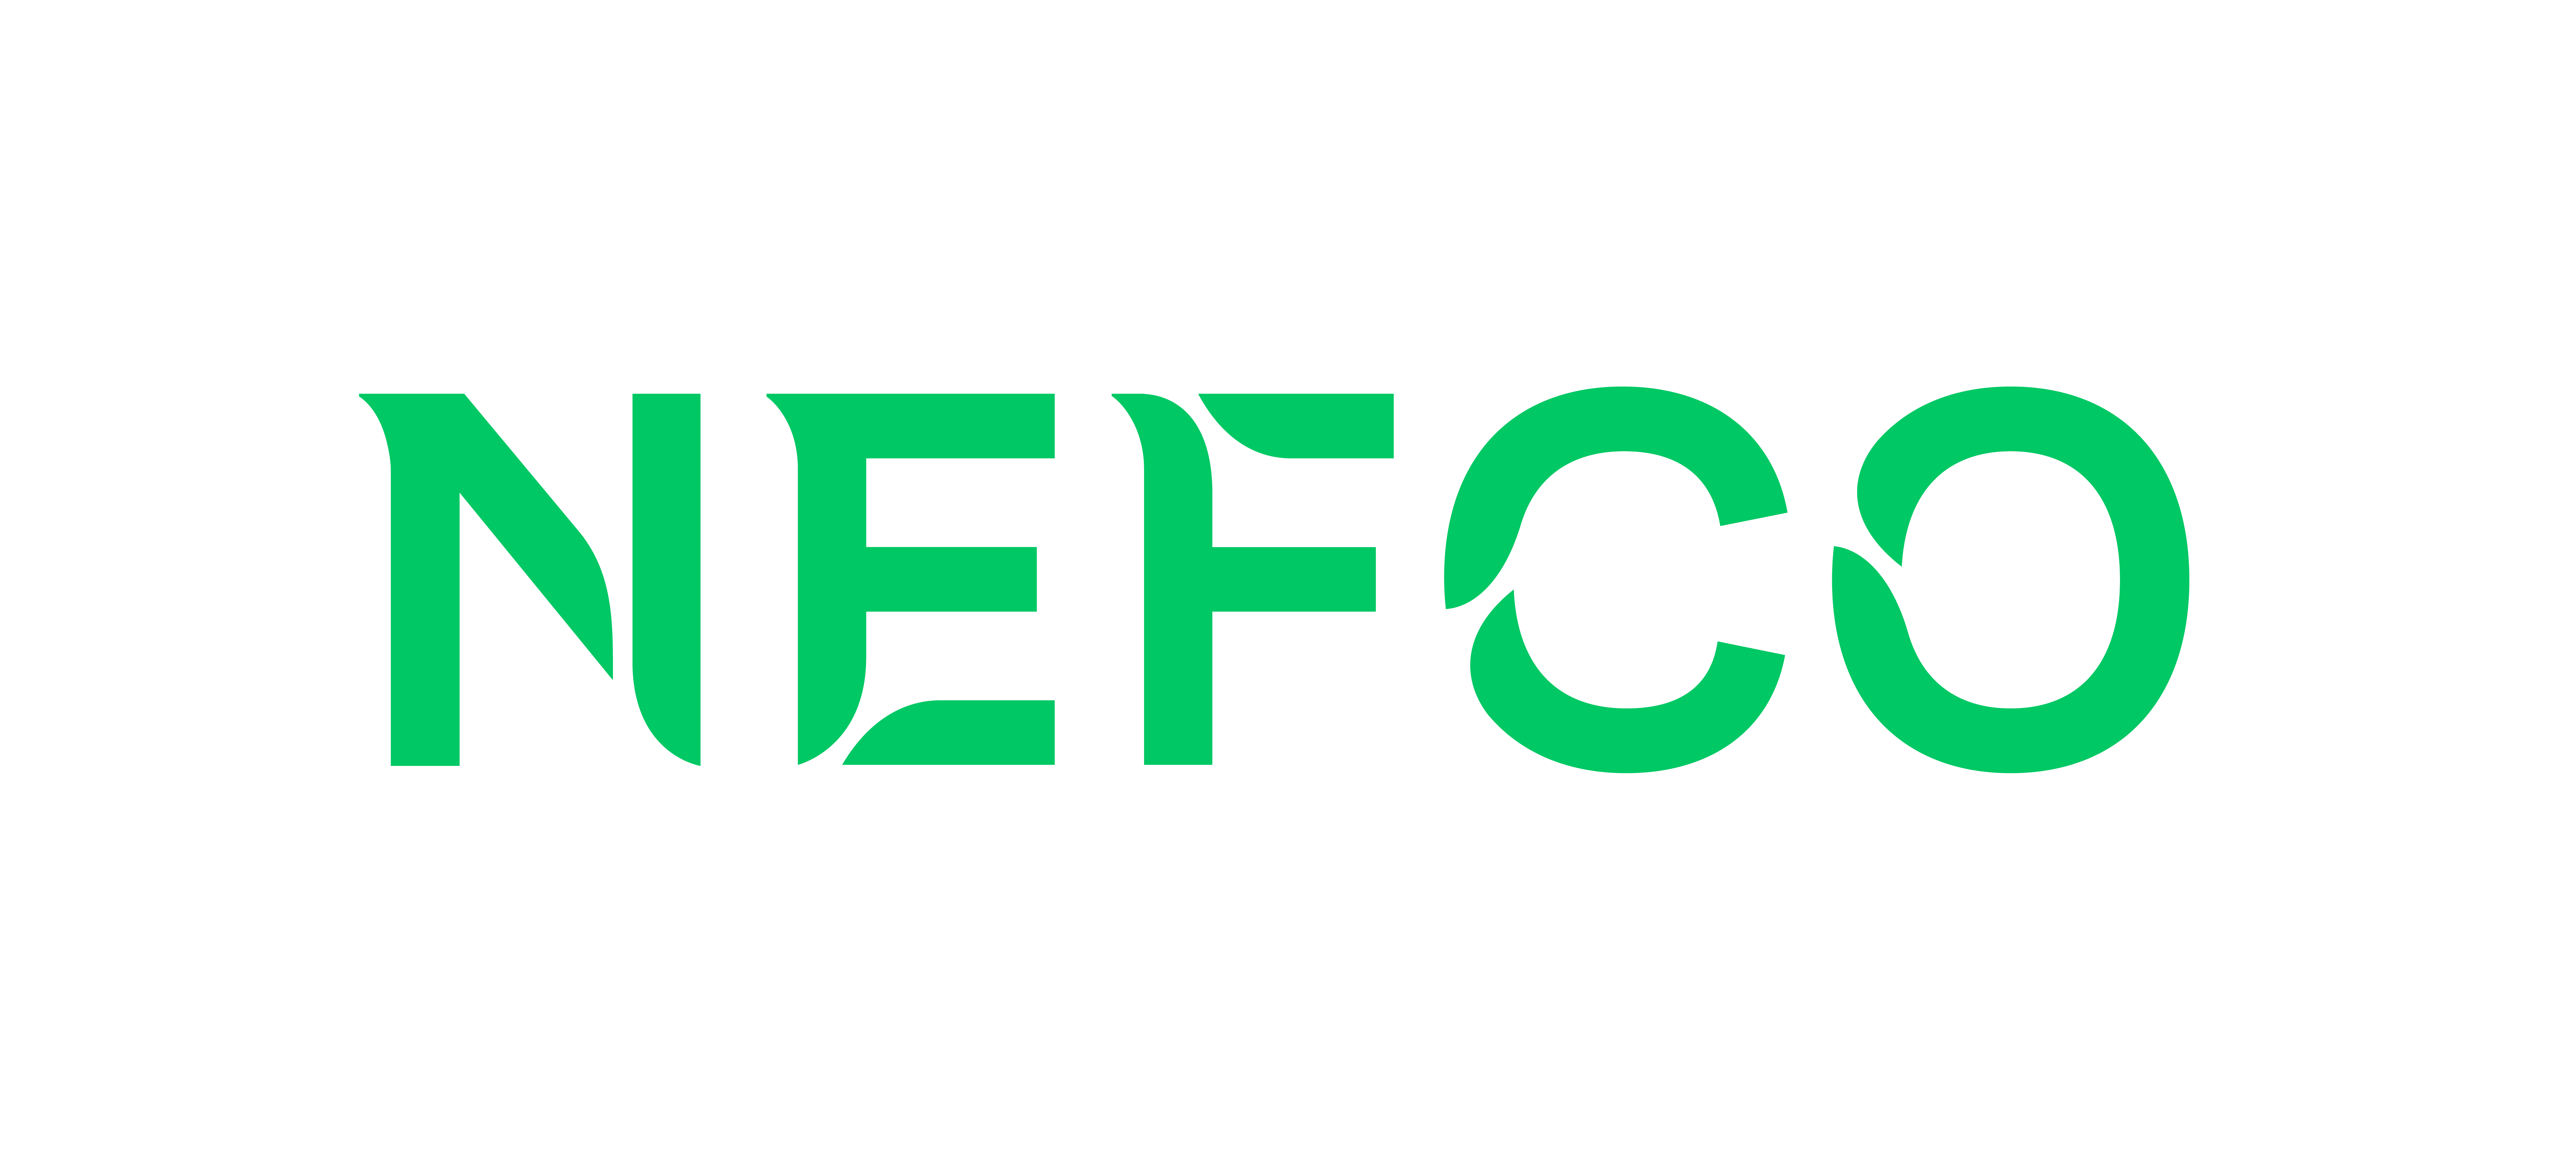 Logo for NEFCO - The Nordic Green Bank